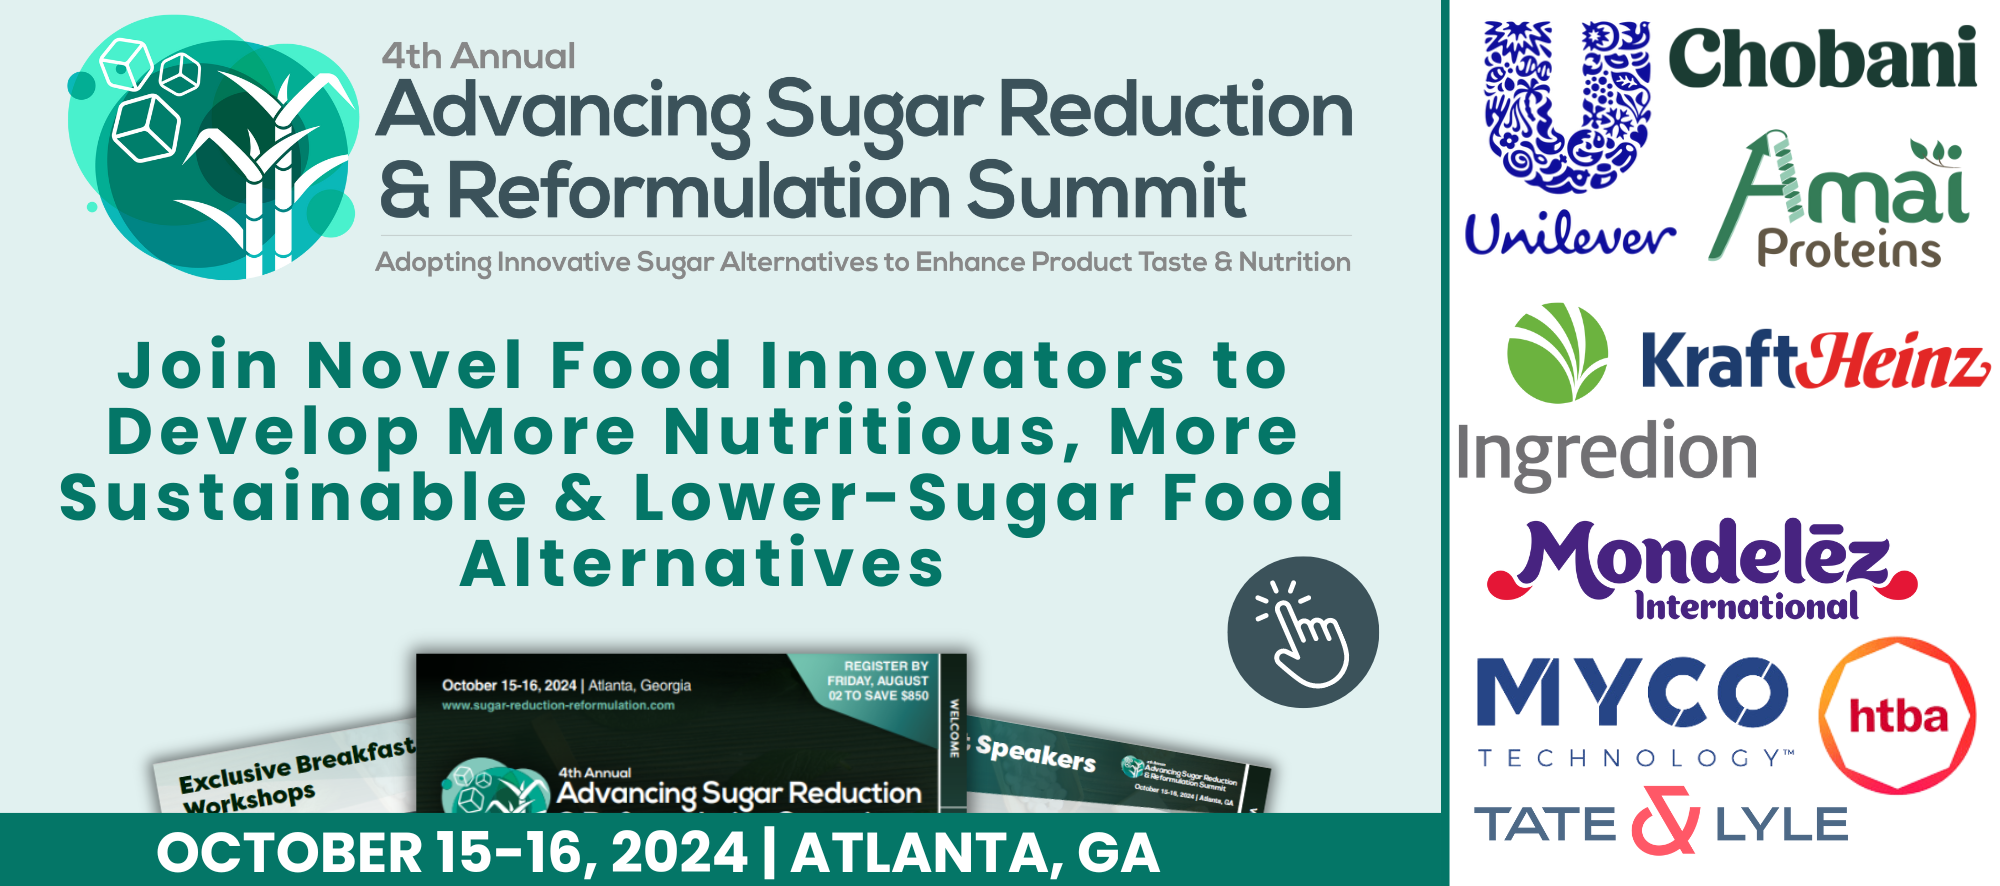 4th Advancing Sugar Reduction & Reformulation Summit